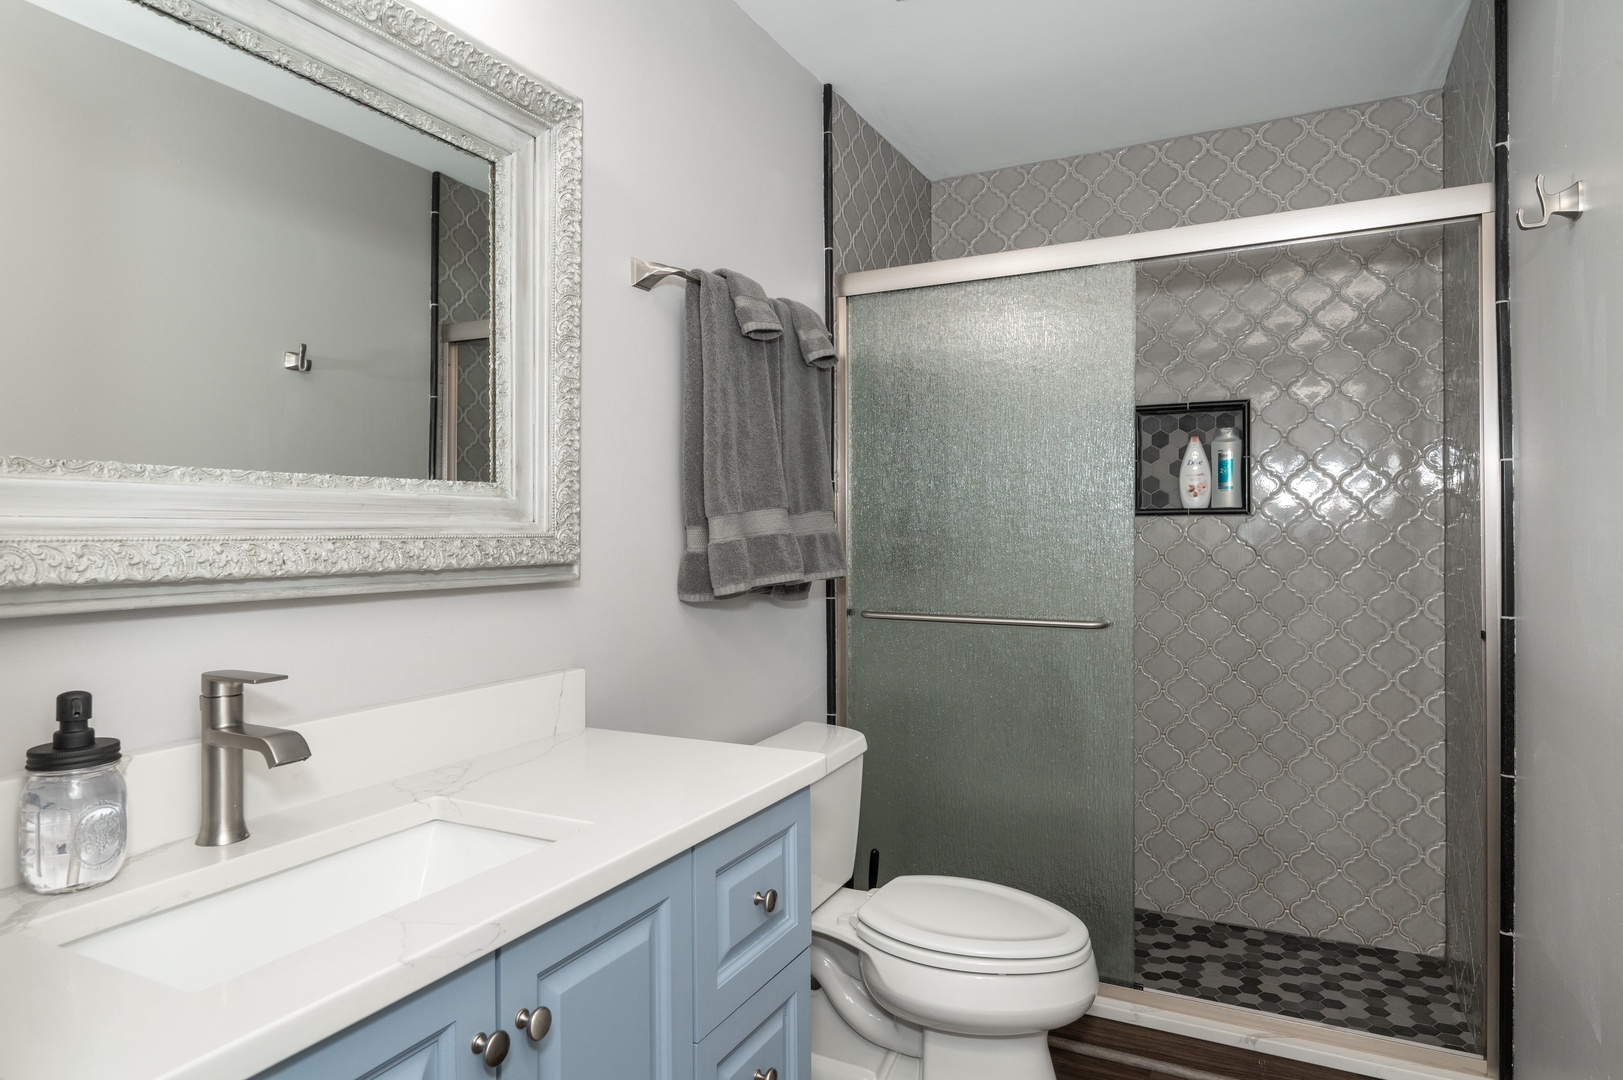 Apt 3 – The full bath includes a stylish single vanity & glass shower